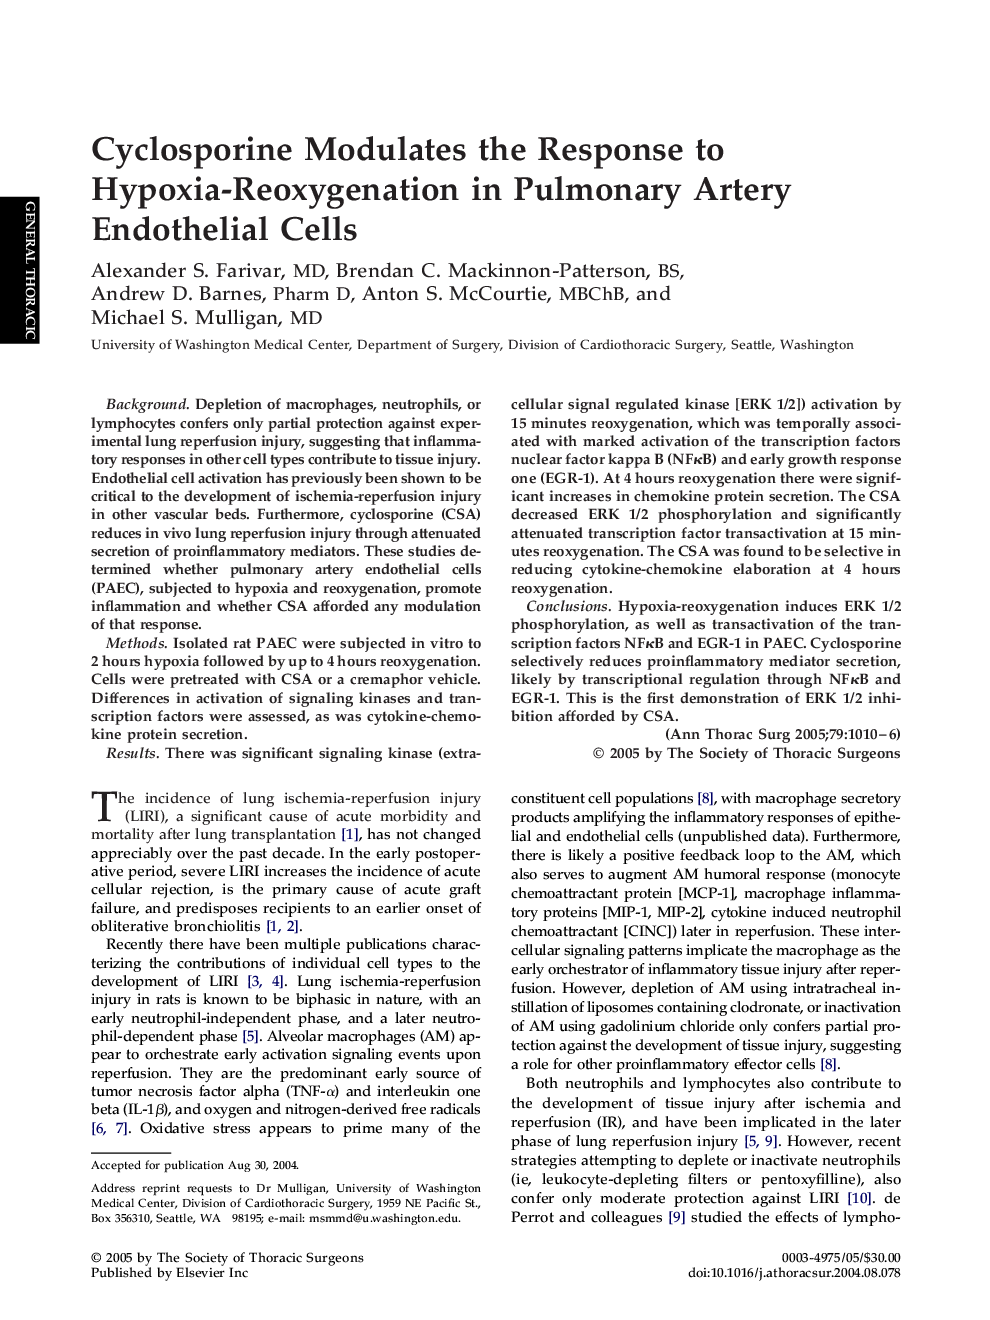 Cyclosporine Modulates the Response to Hypoxia-Reoxygenation in Pulmonary Artery Endothelial Cells